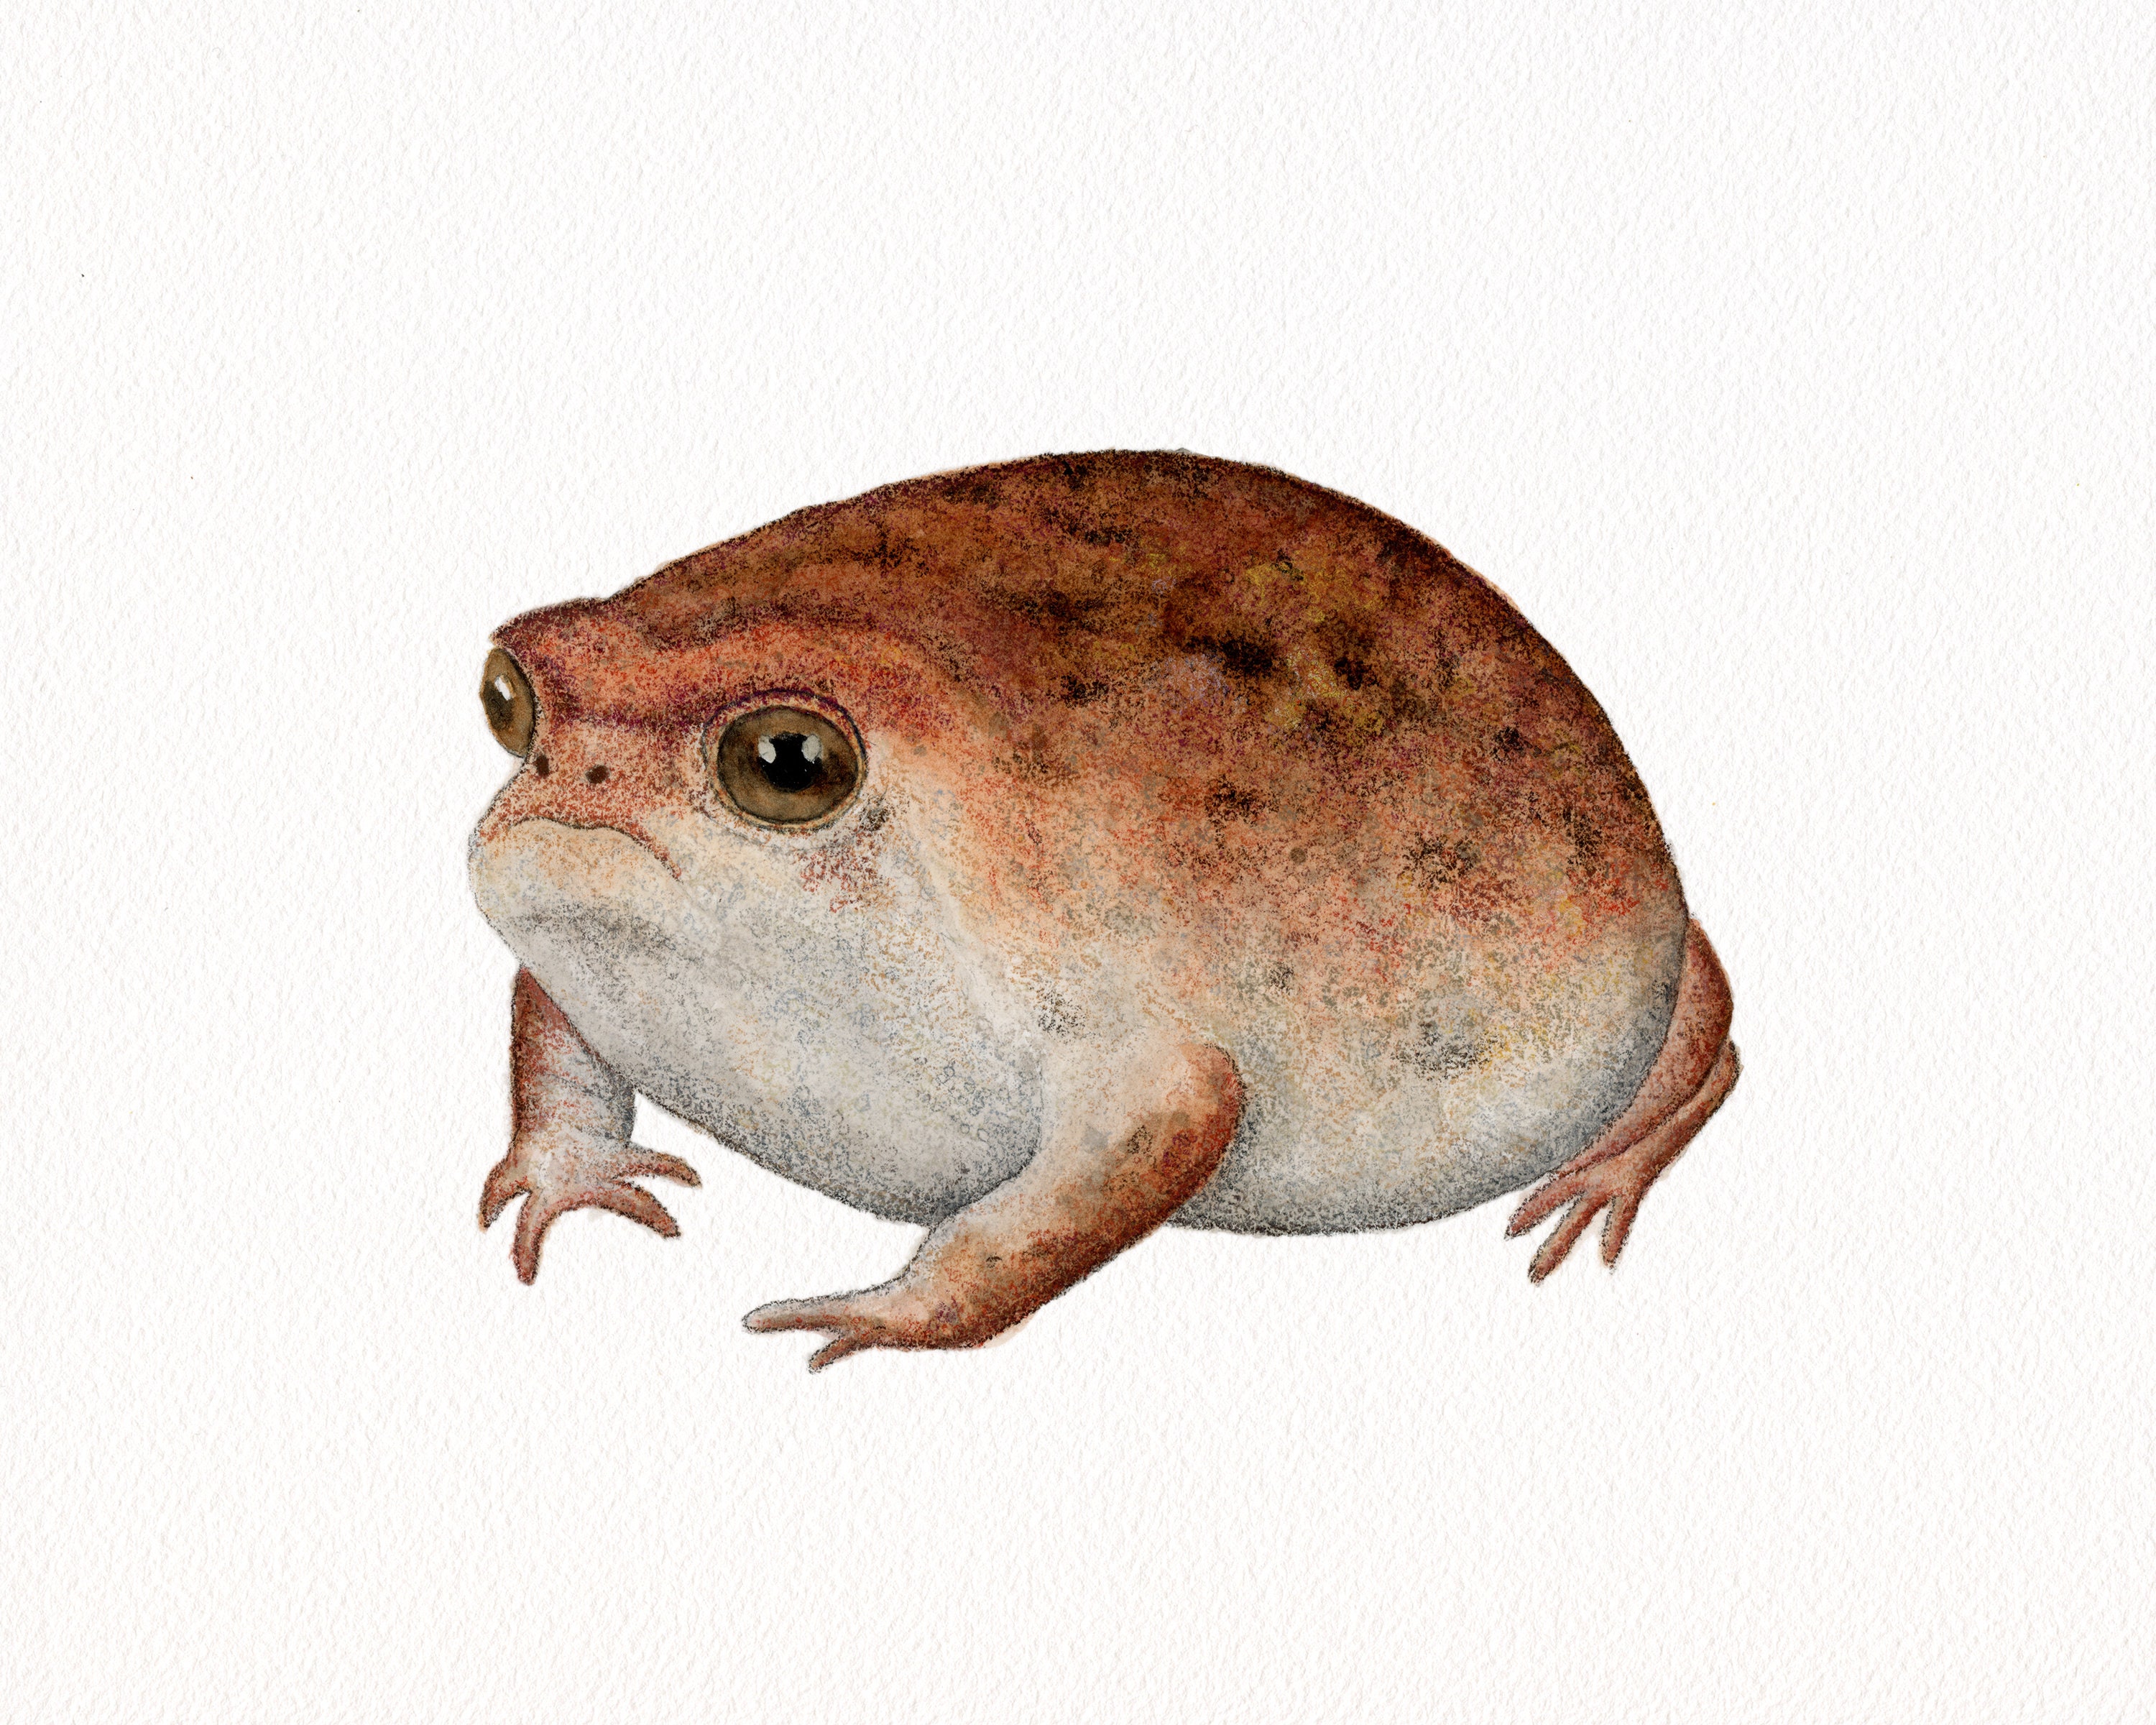 Cinnamon Roll Rain Frog Sticker – The Serpentry